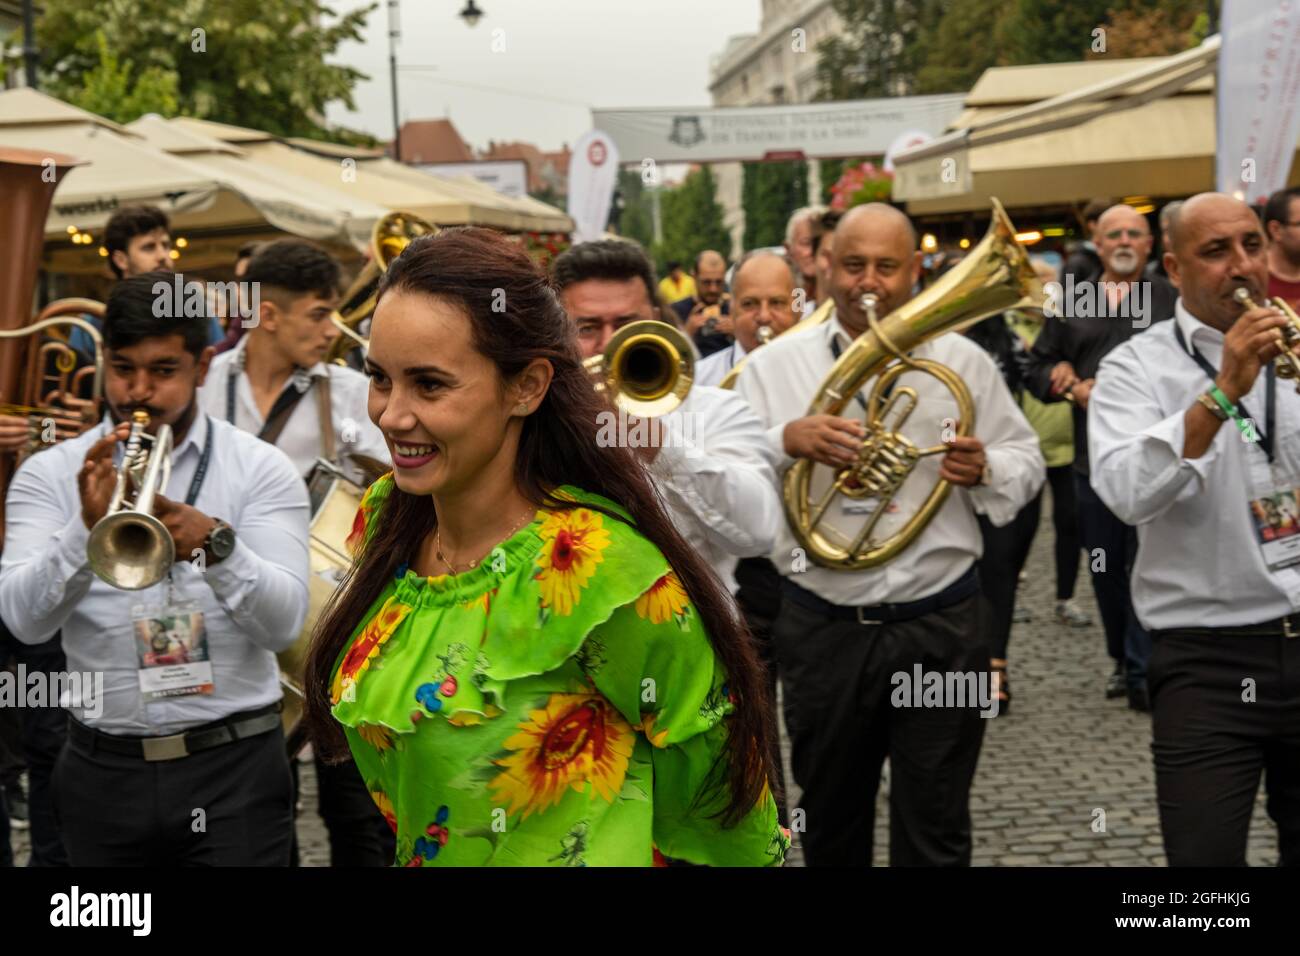 Sibiu City, Romania - 25 August 2021. The Brass Band from Cozmesti performing at the Sibiu International Theatre Festival from Sibiu, Romania. Stock Photo